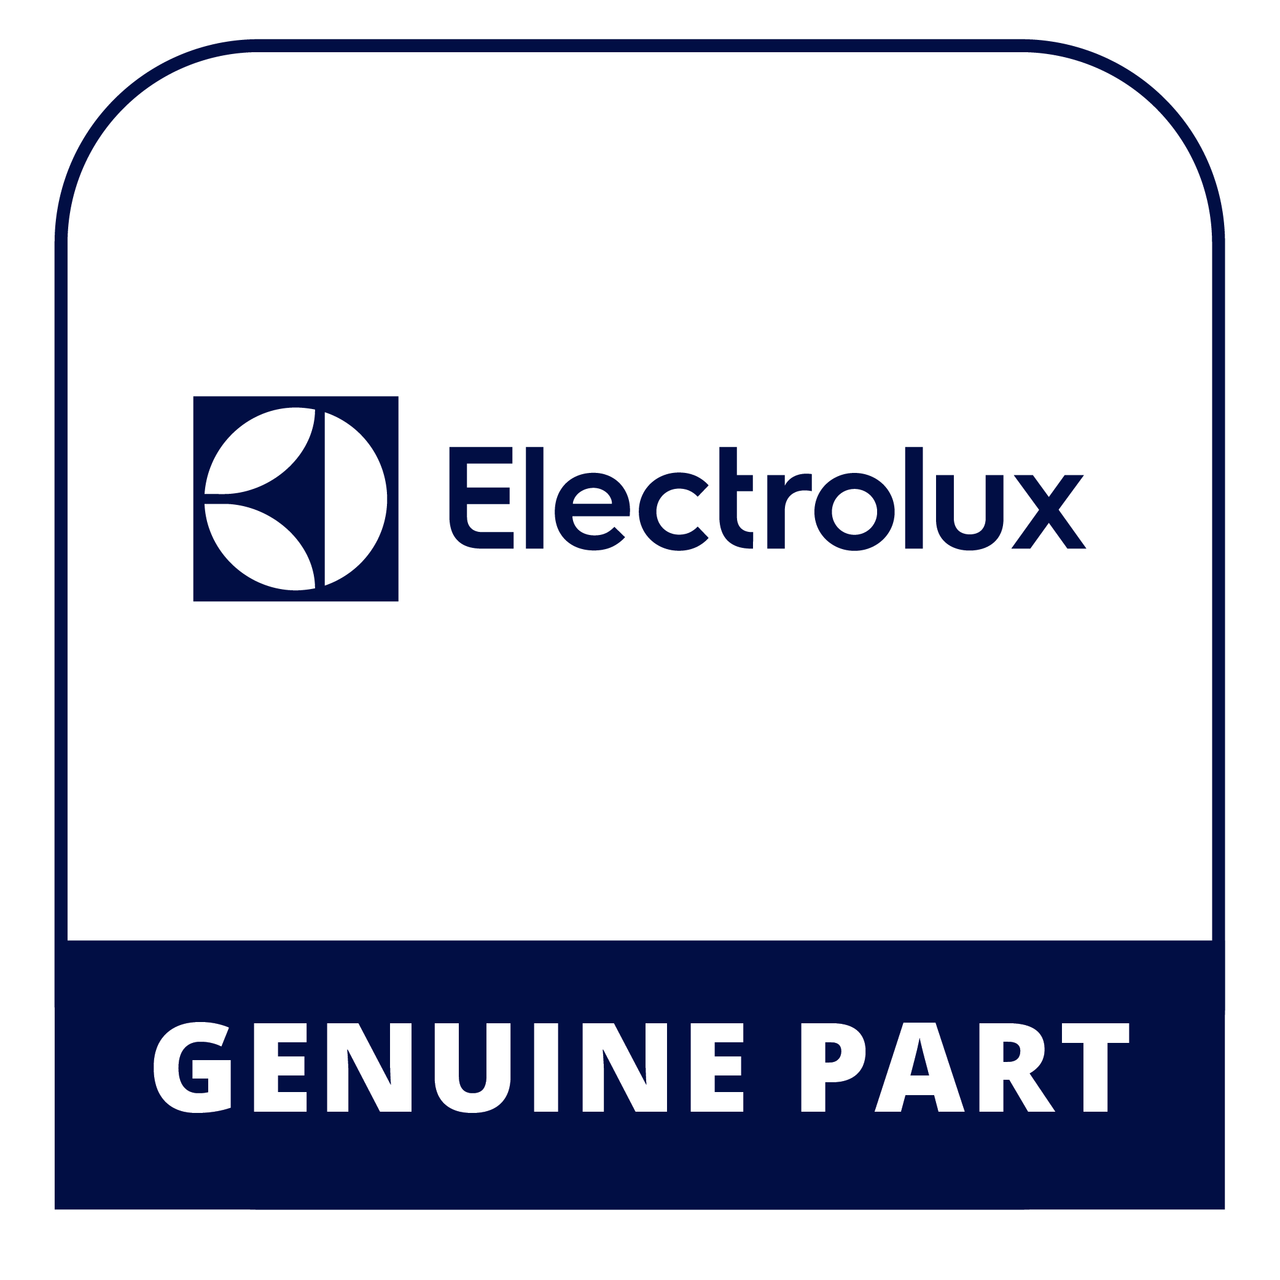 Frigidaire - Electrolux 134711000 Bracket - Genuine Electrolux Part